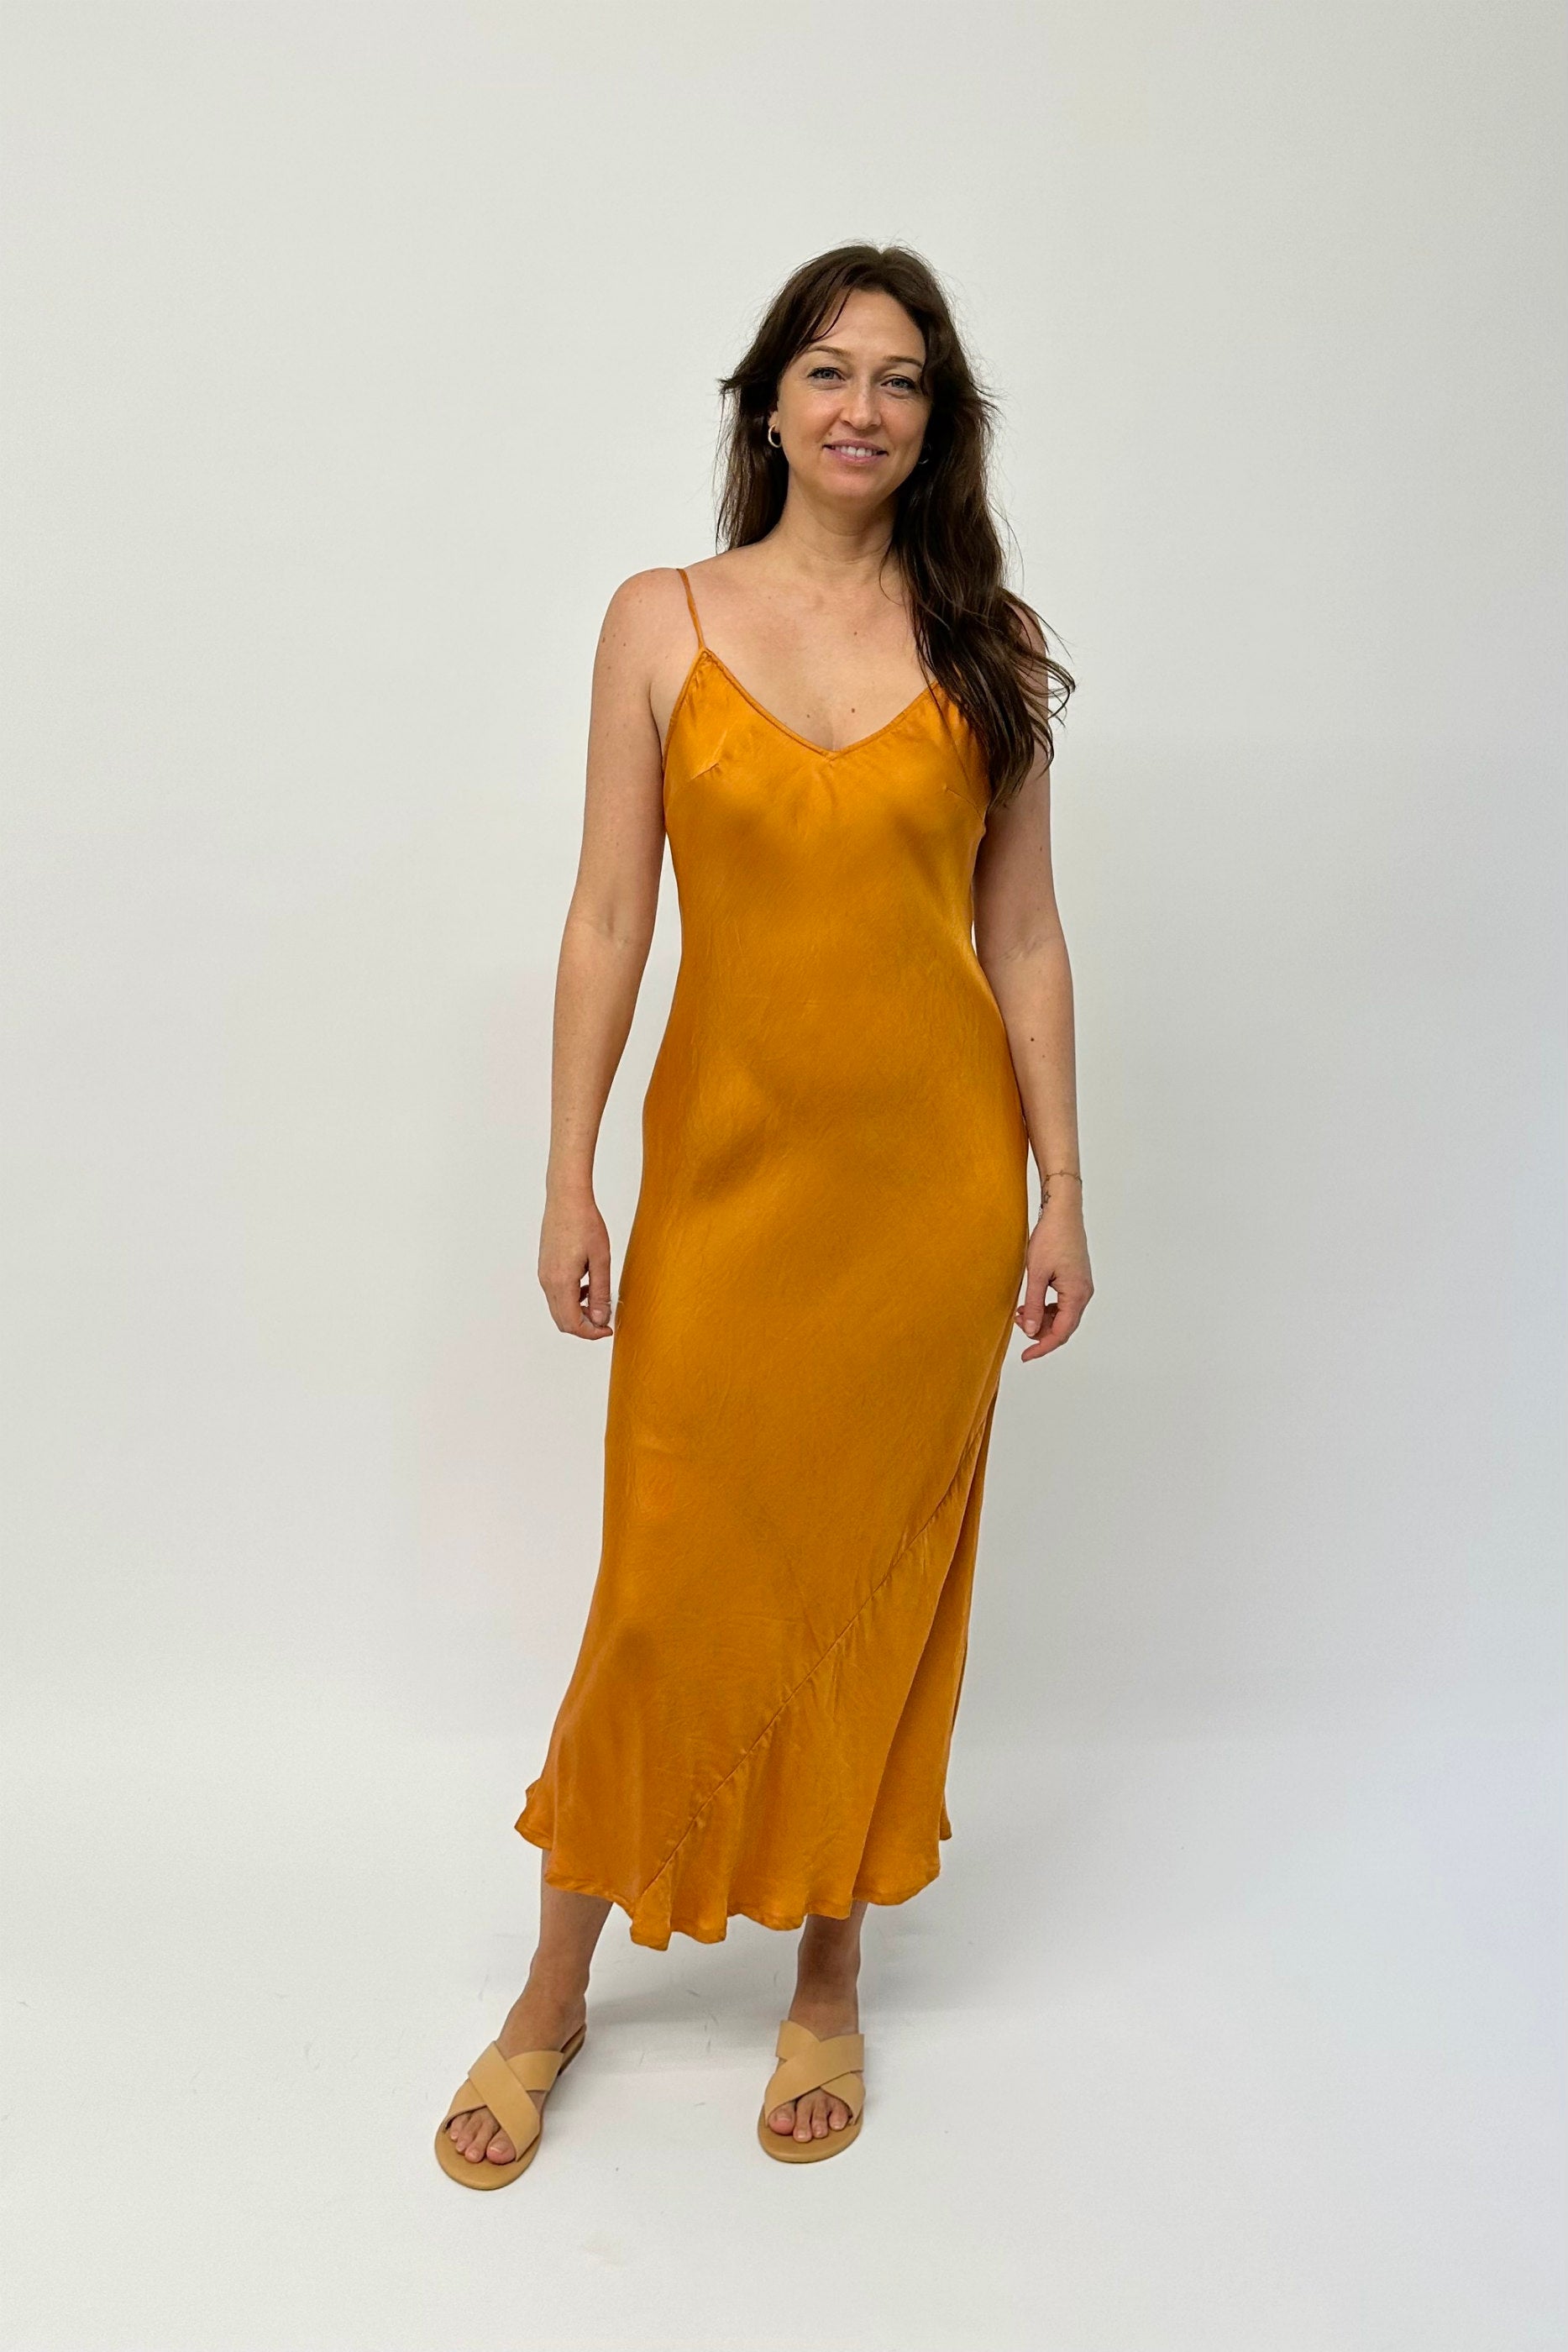 Gold silk mix bias cut slip dress in maxi length